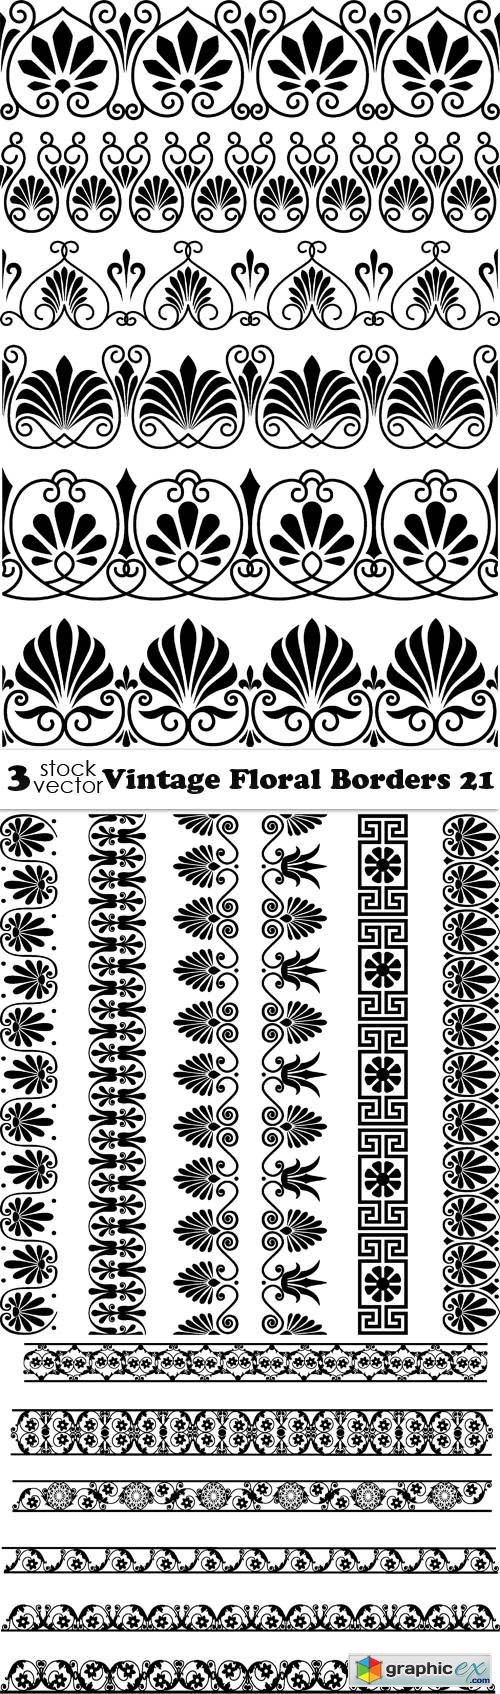  Vectors - Vintage Floral Borders 21 